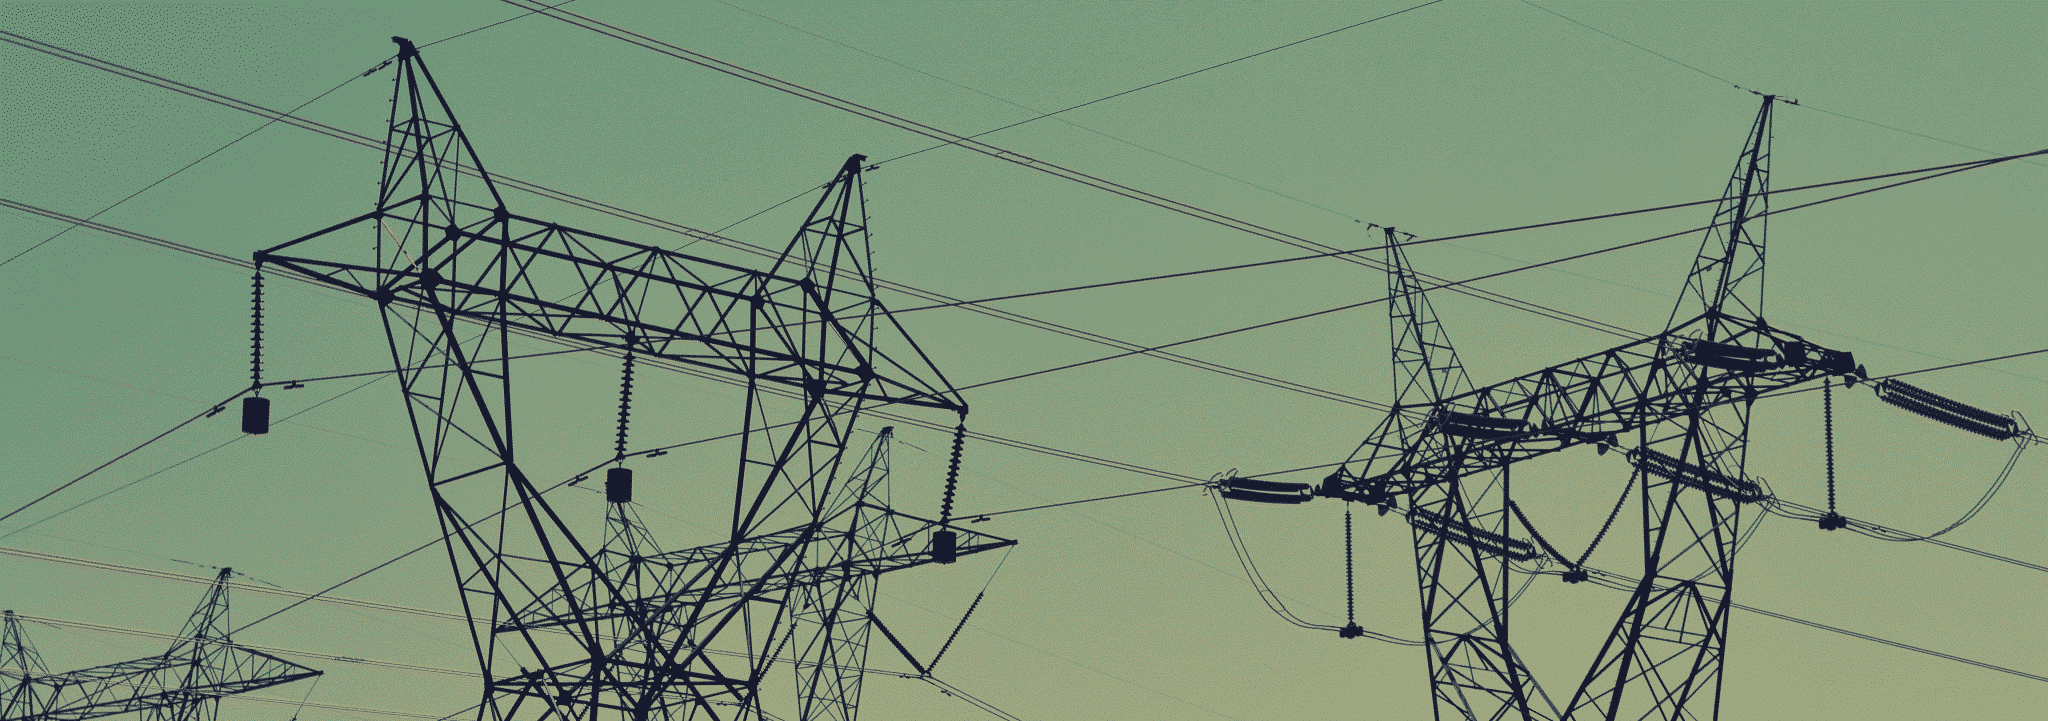 AleaSoft - Electricity grid